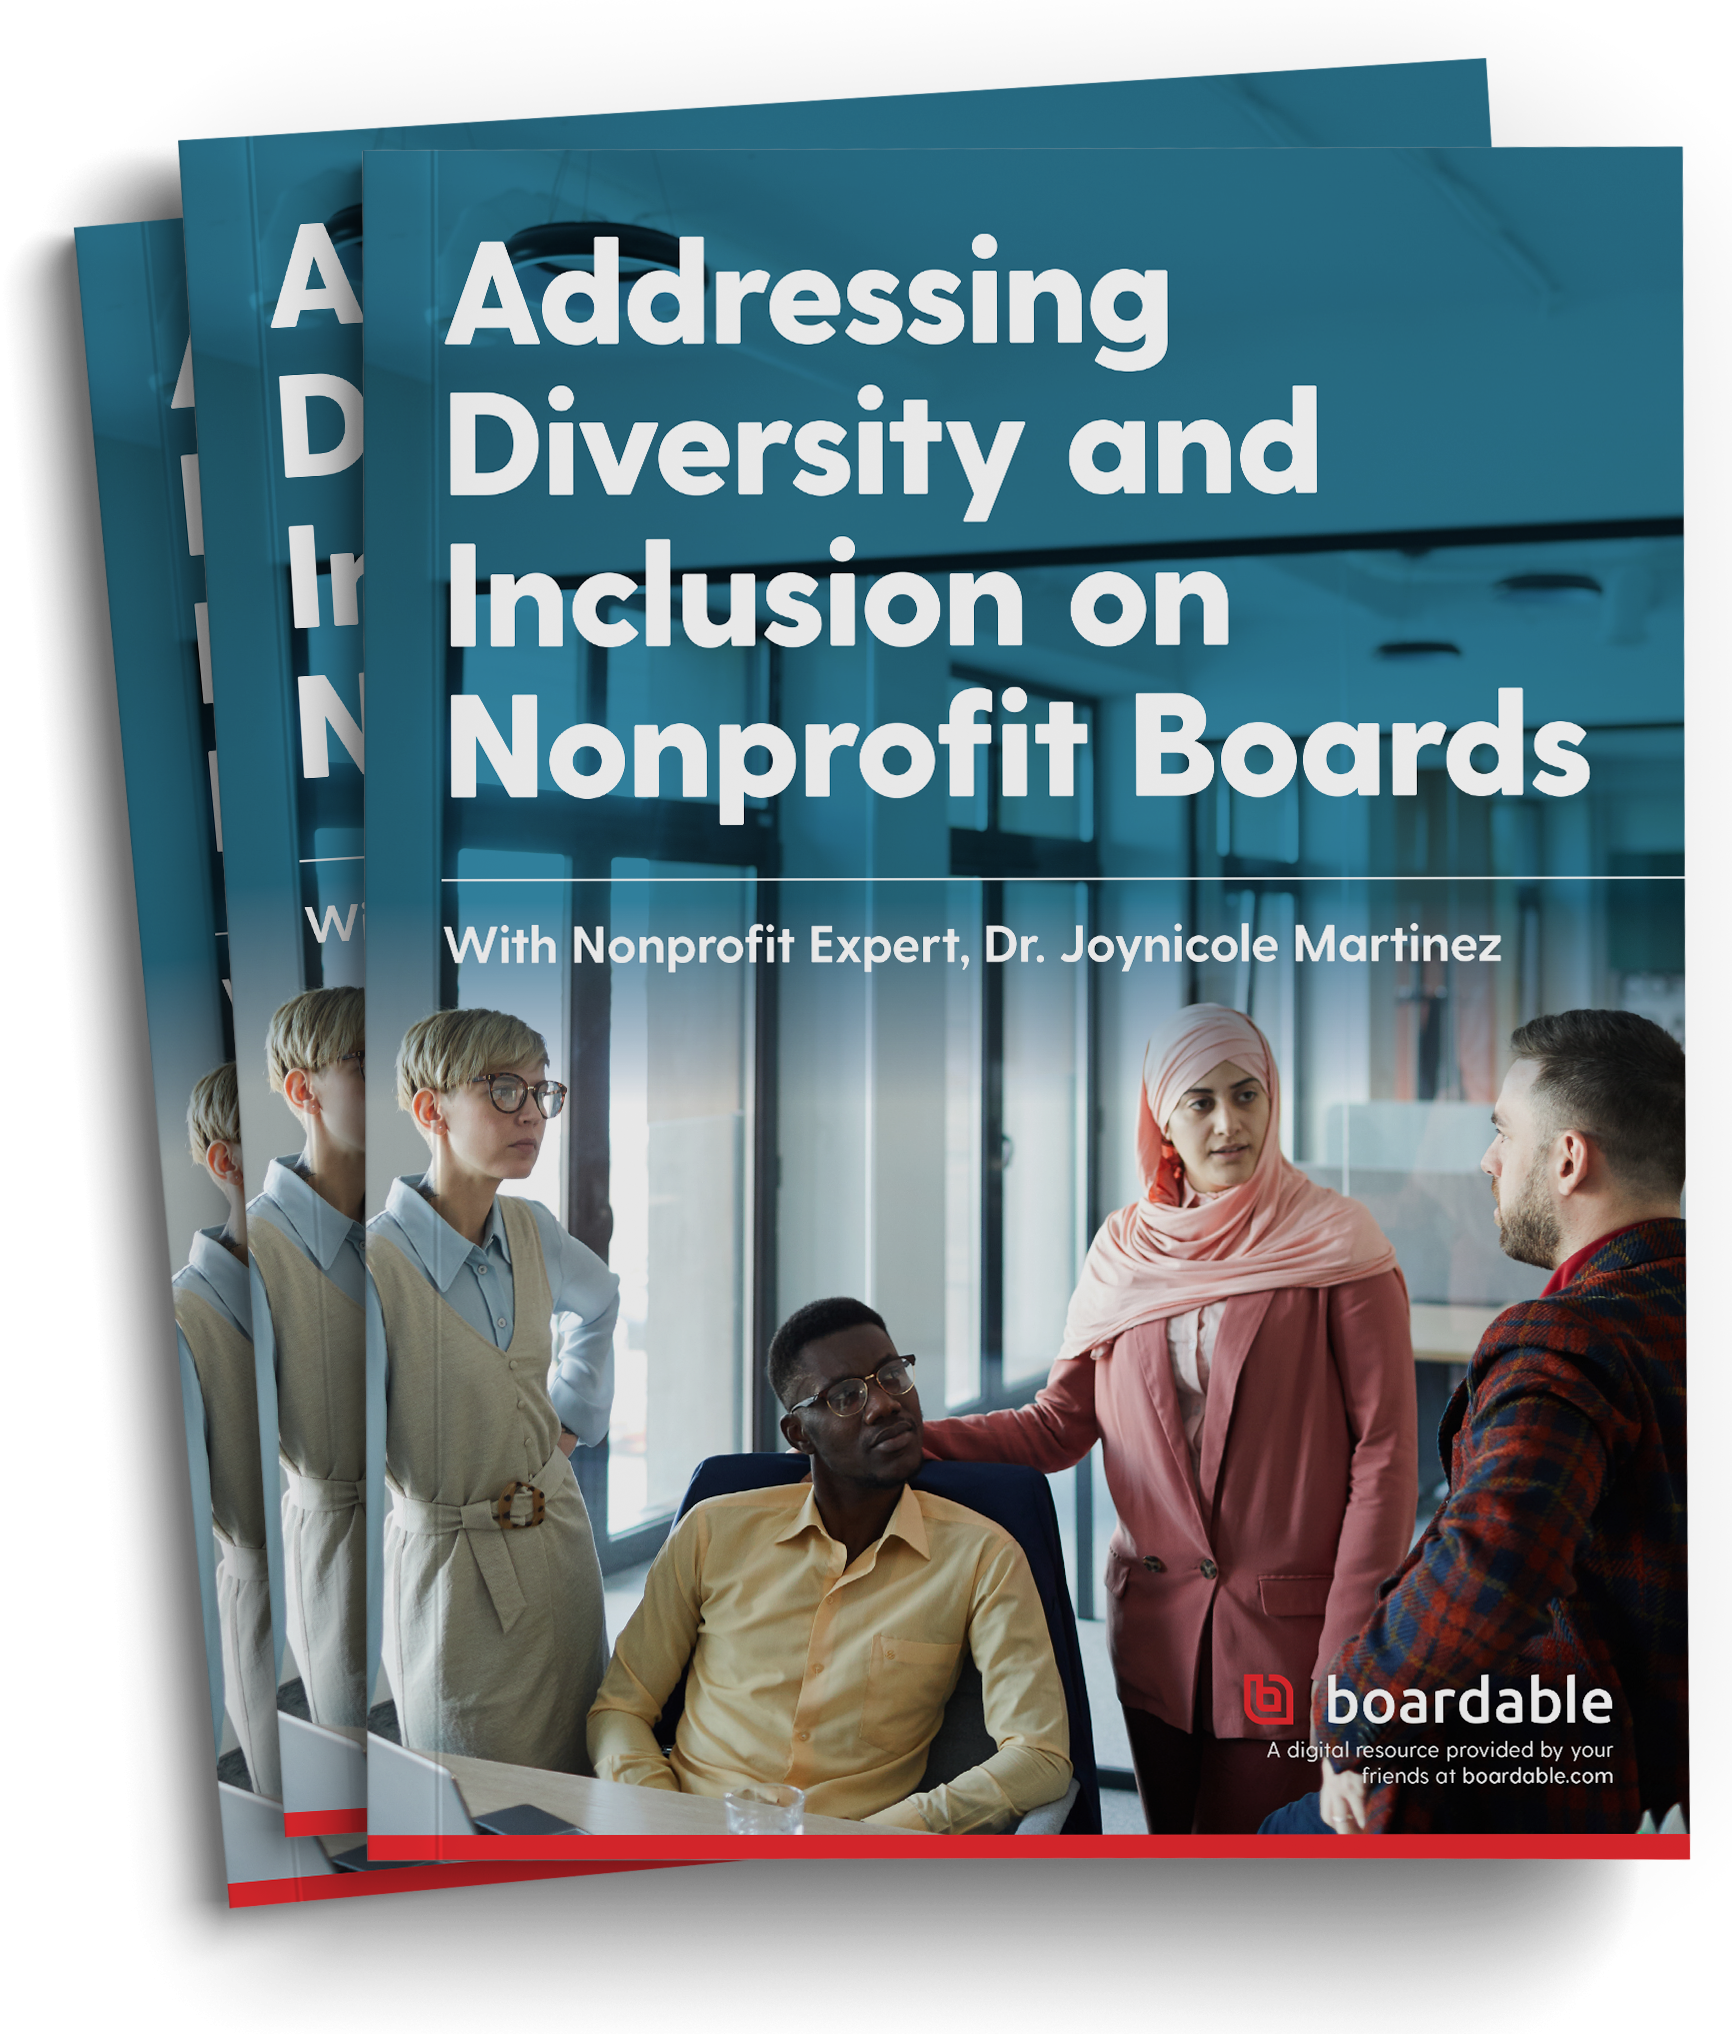 Download The Nonprofit Diversity & Inclusion Ebook Guide